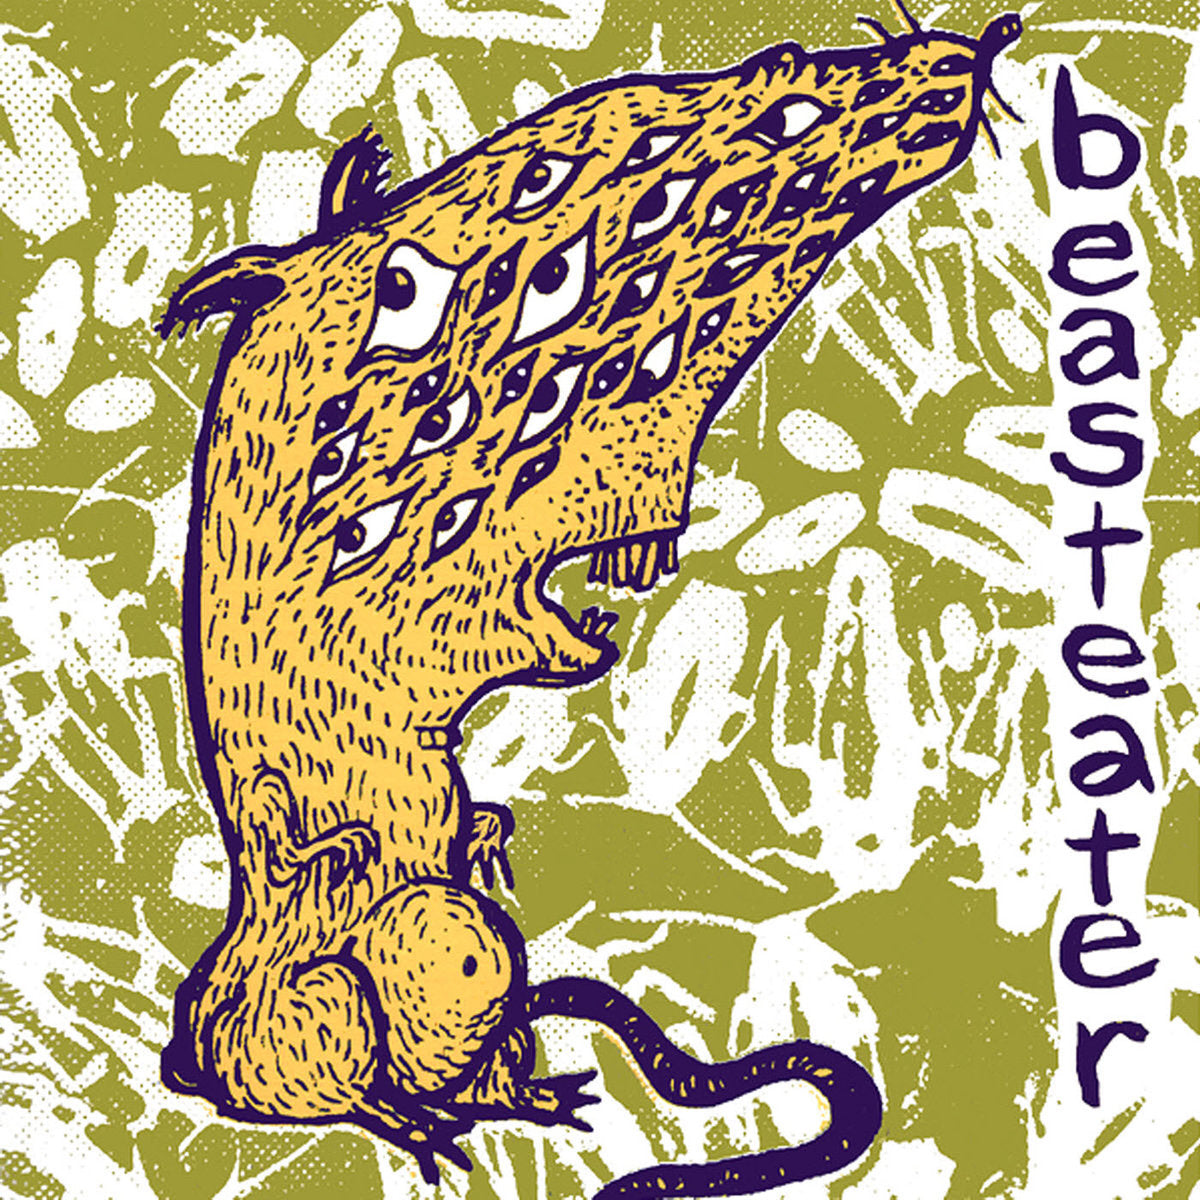 Beasteater- S/T LP ~EX DIRTBOMBS / DIRTYS!